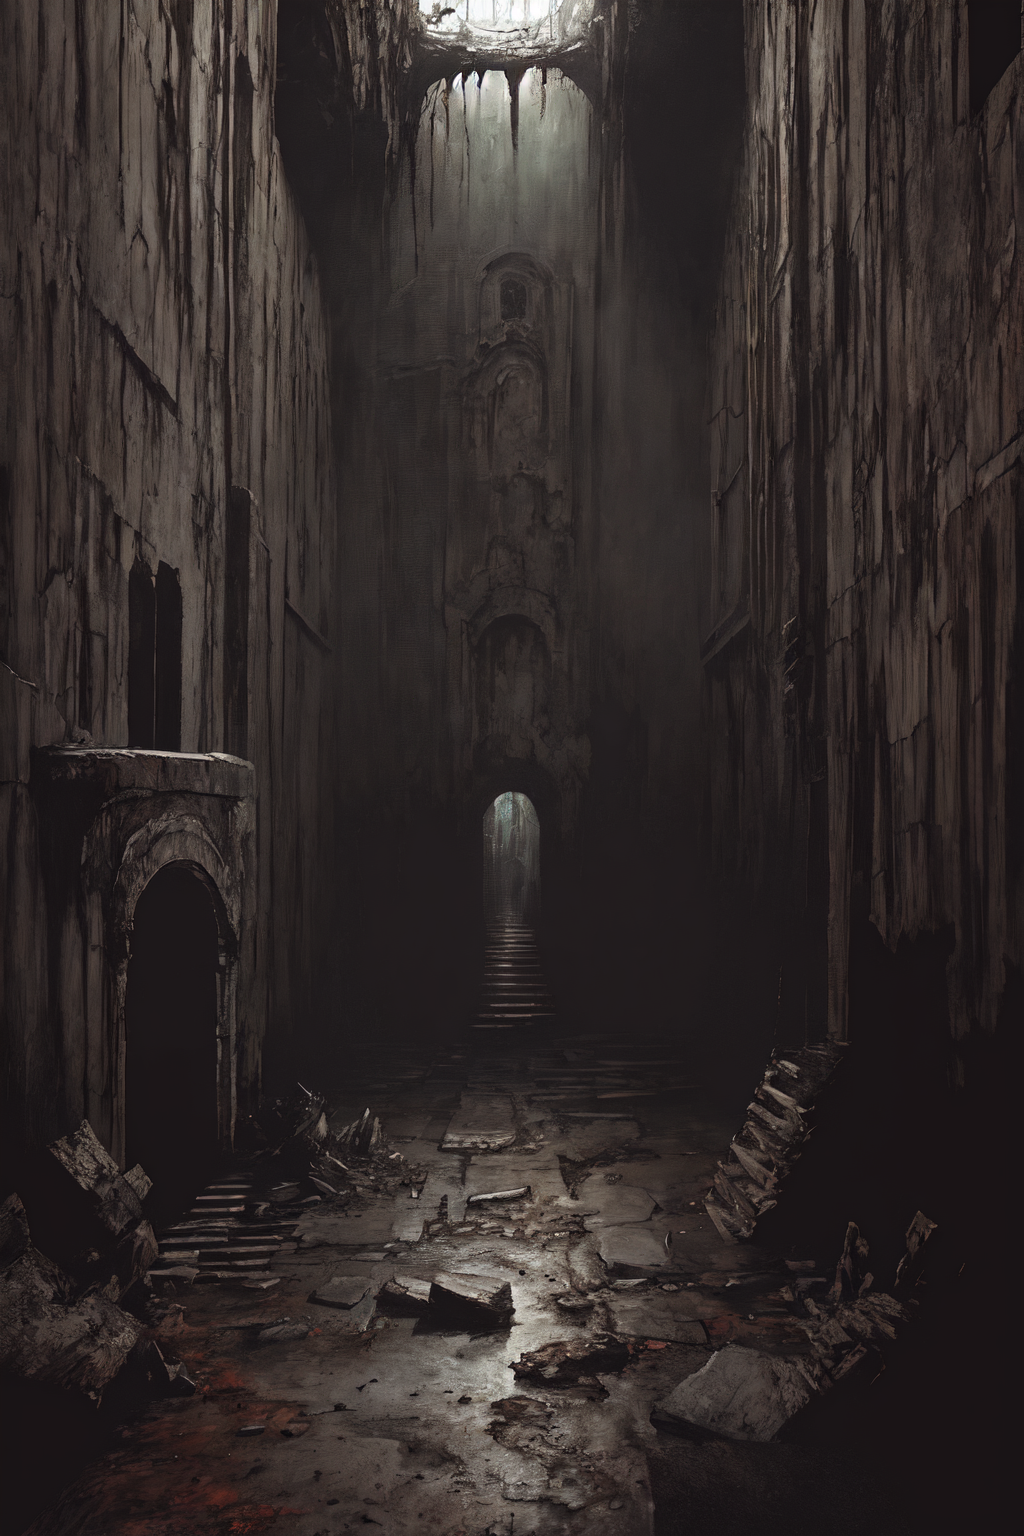 A dark, narrow, and creepy hallway leading to a dark doorway.